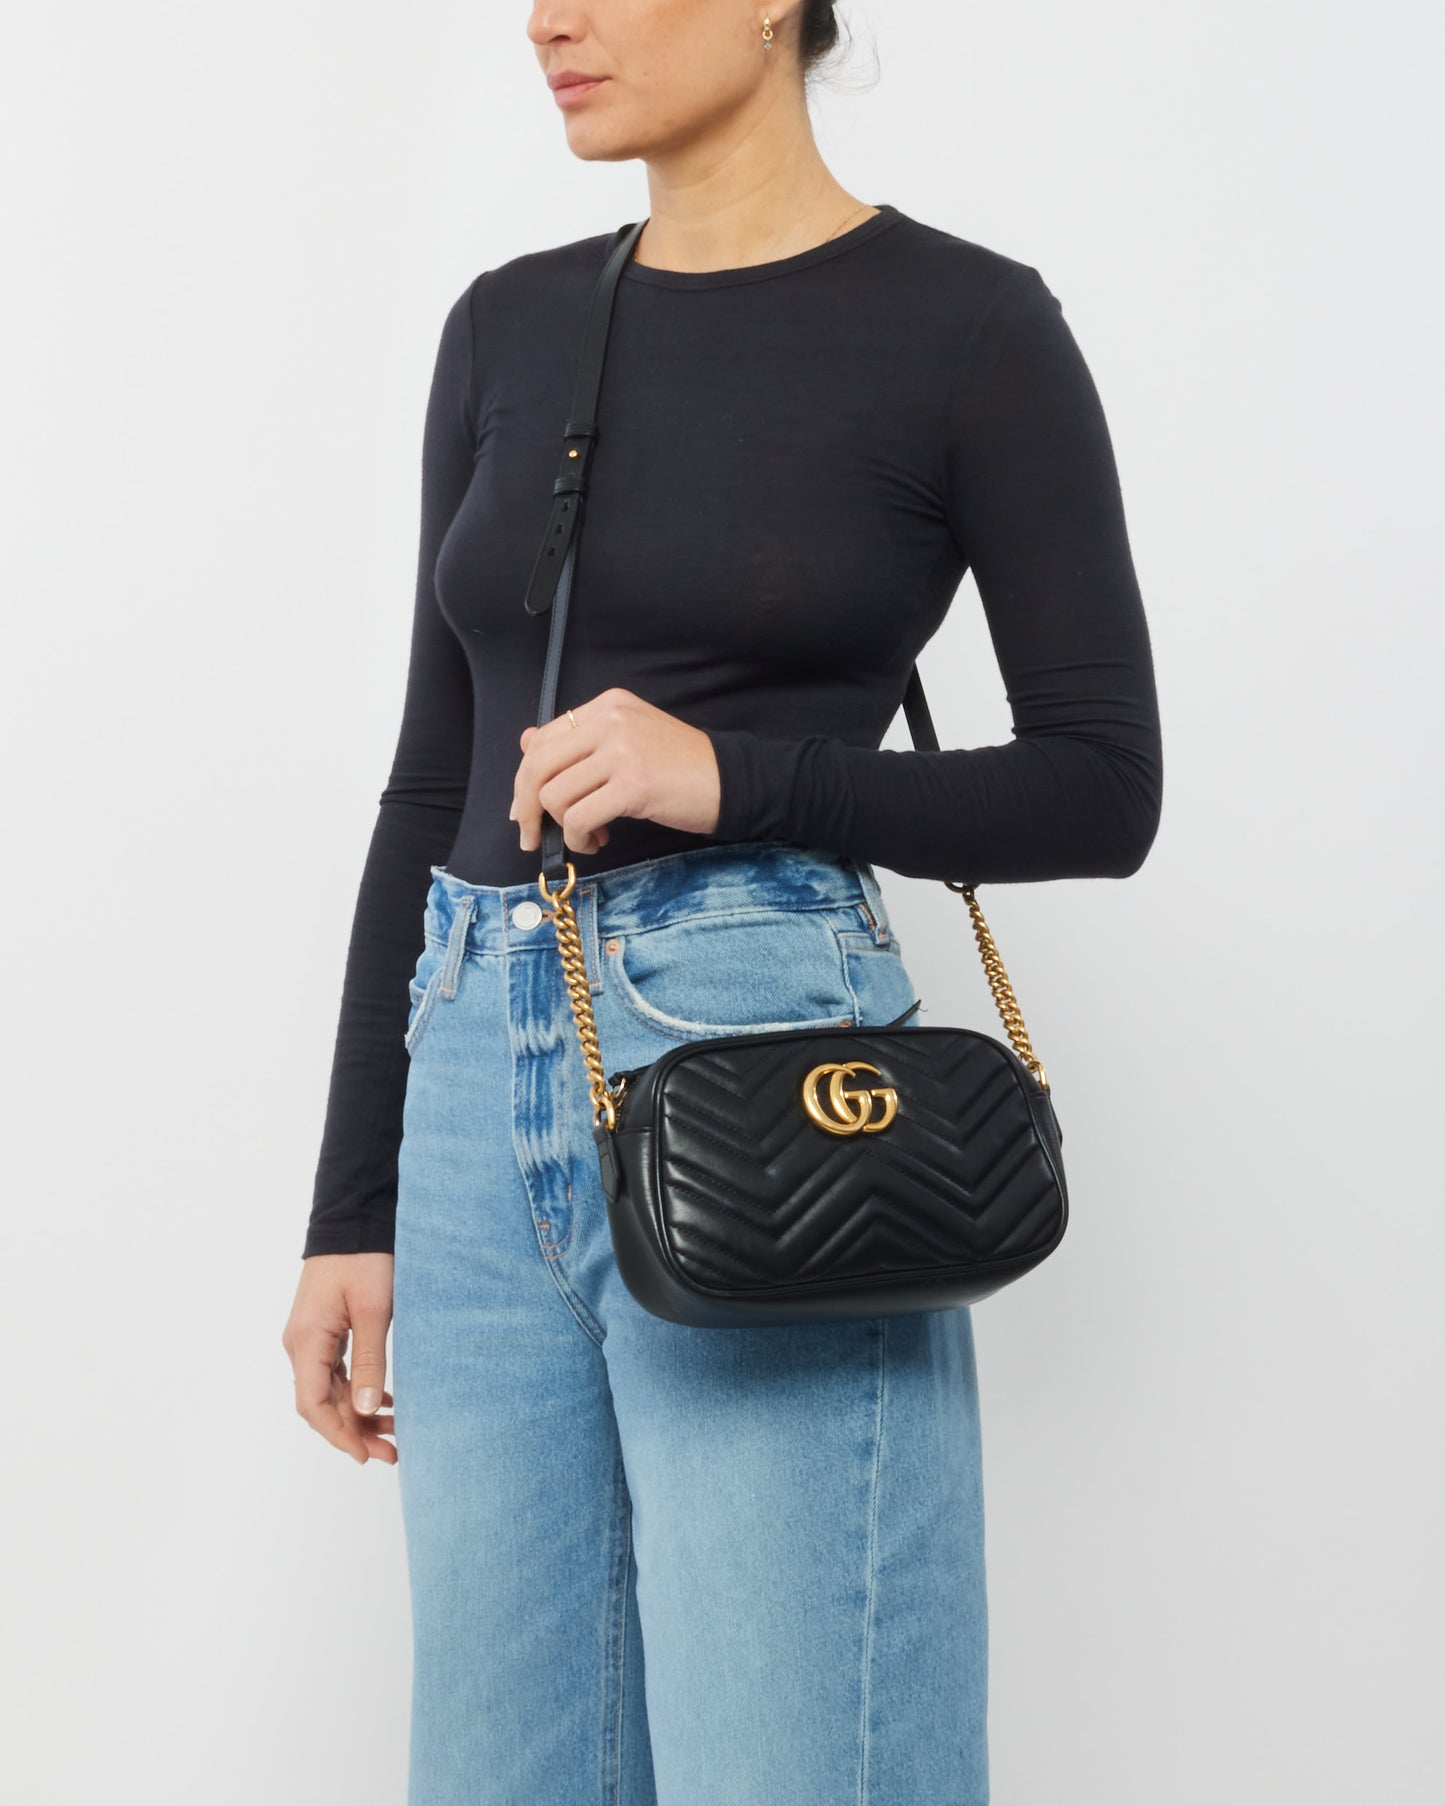 Gucci Black Matlassée Leather Small Marmont Camera Bag